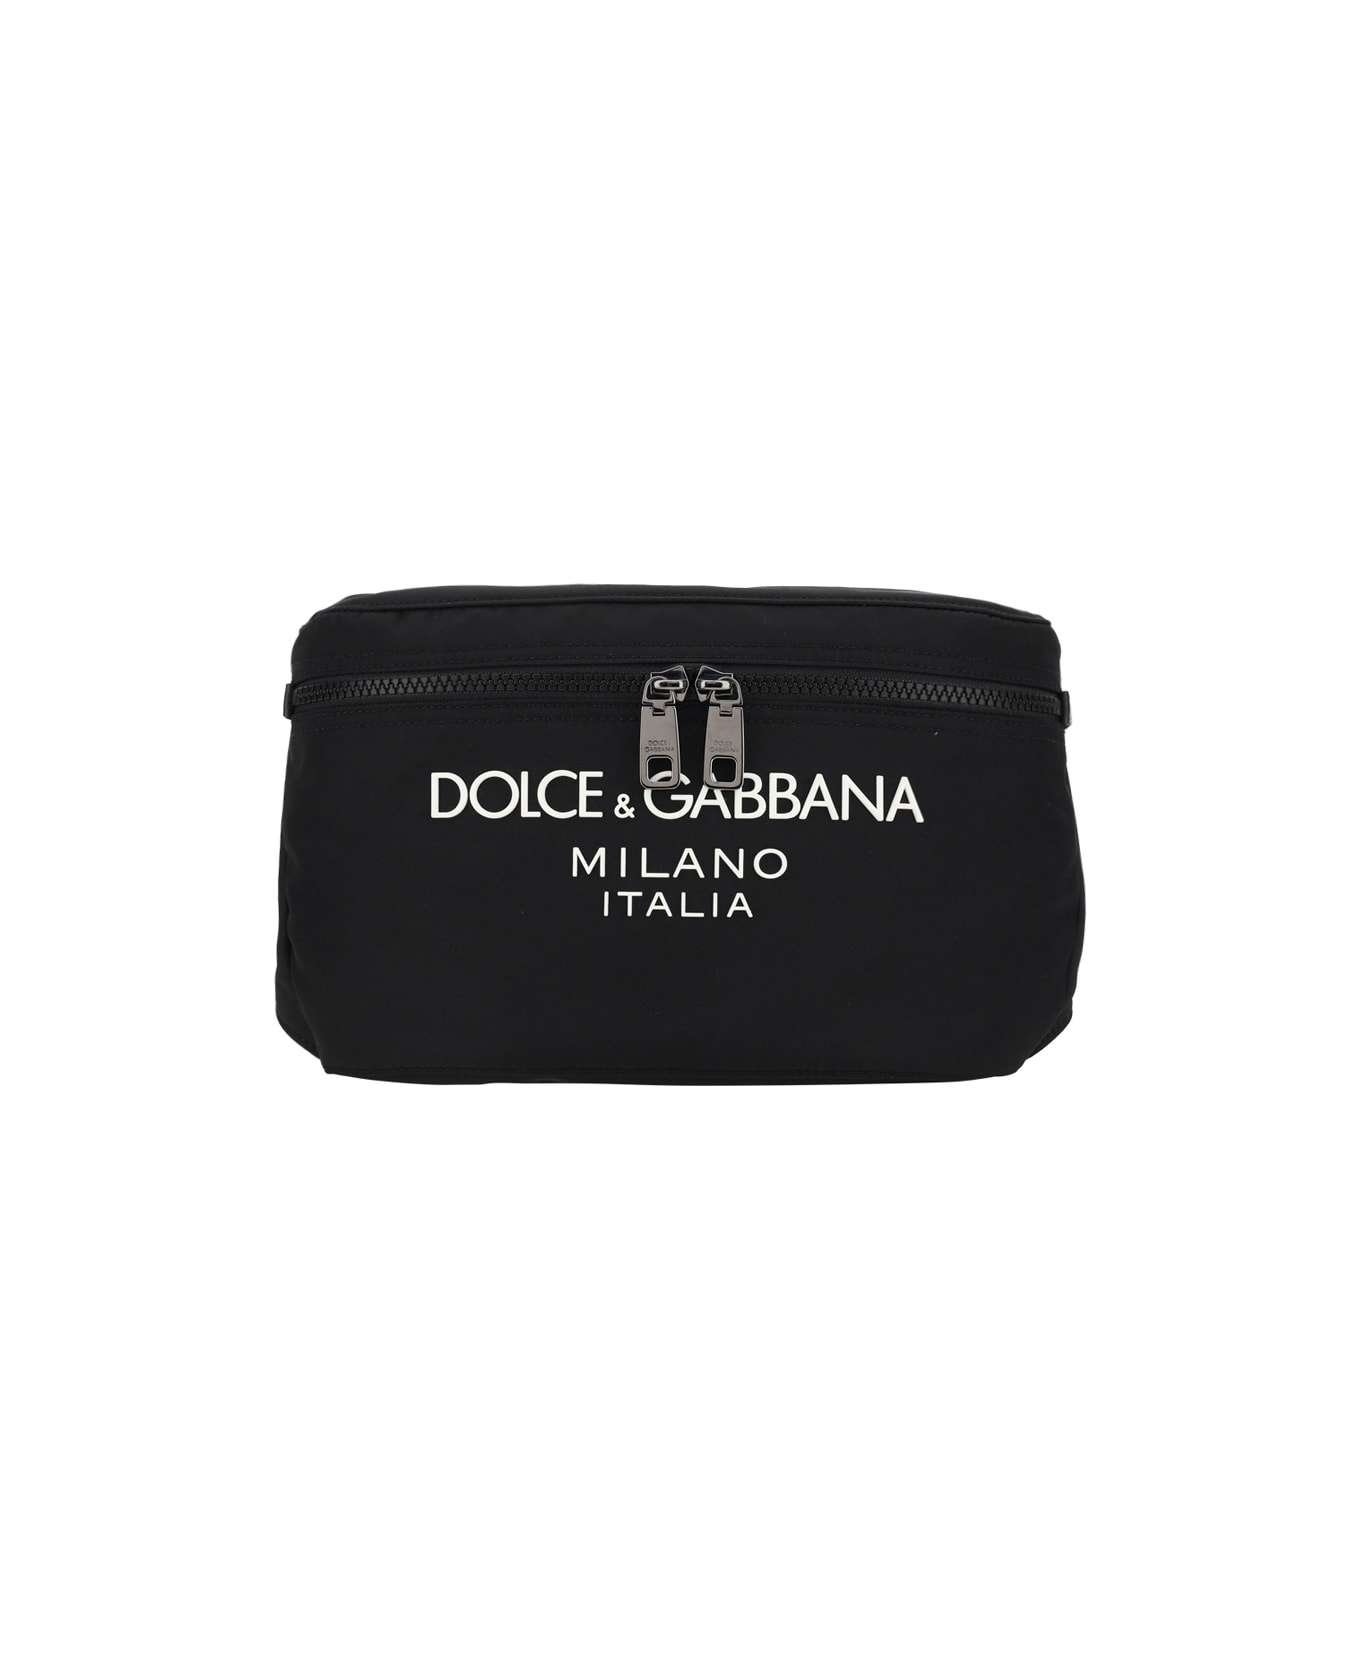 Dolce & Gabbana Belt Bag - Nero/nero